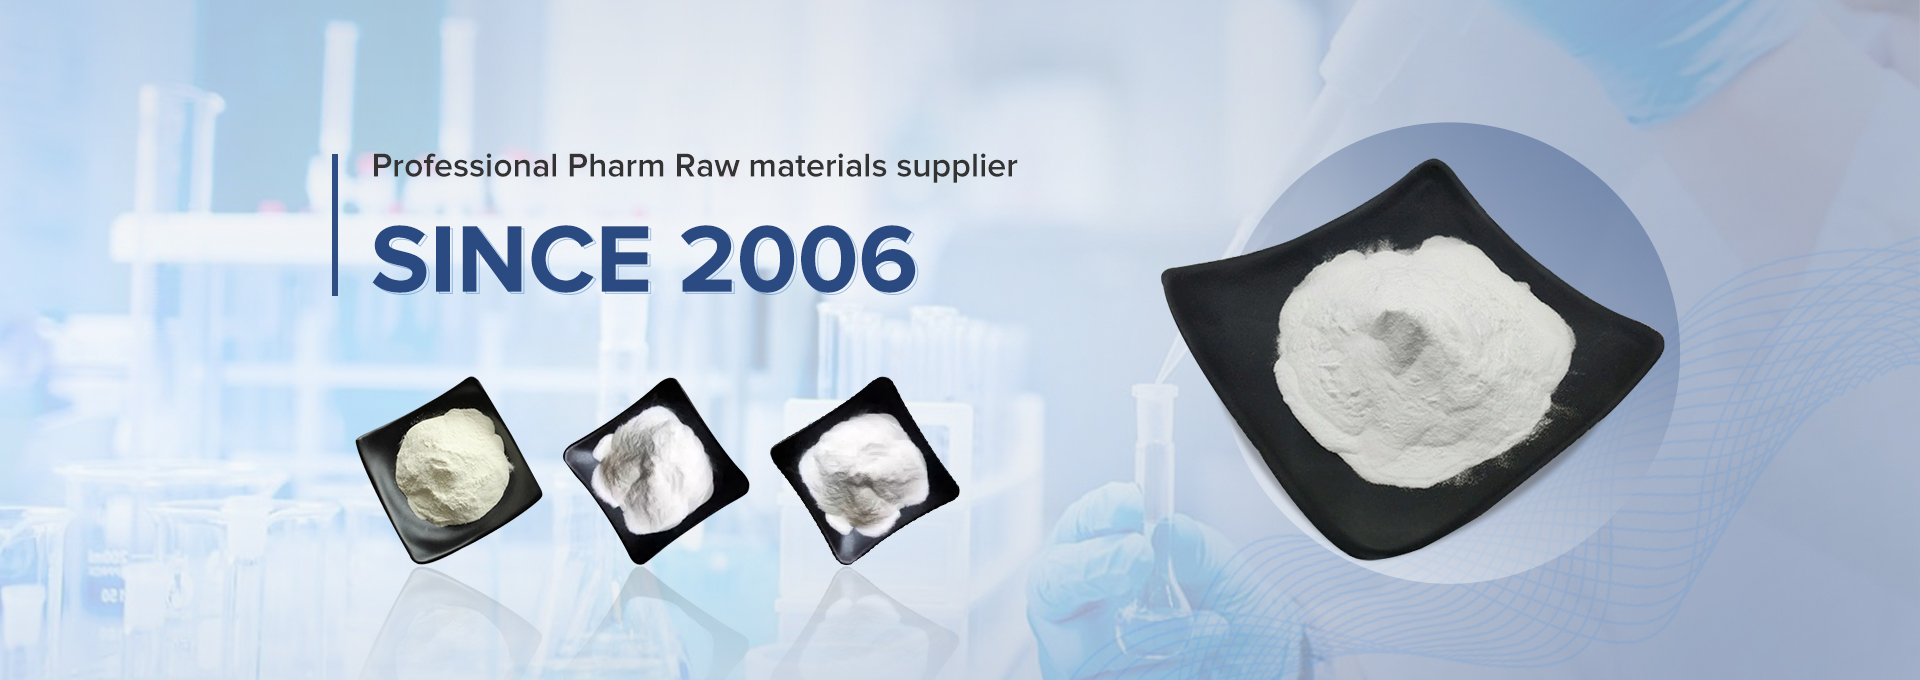 Professional Pharm Raw materials supplier